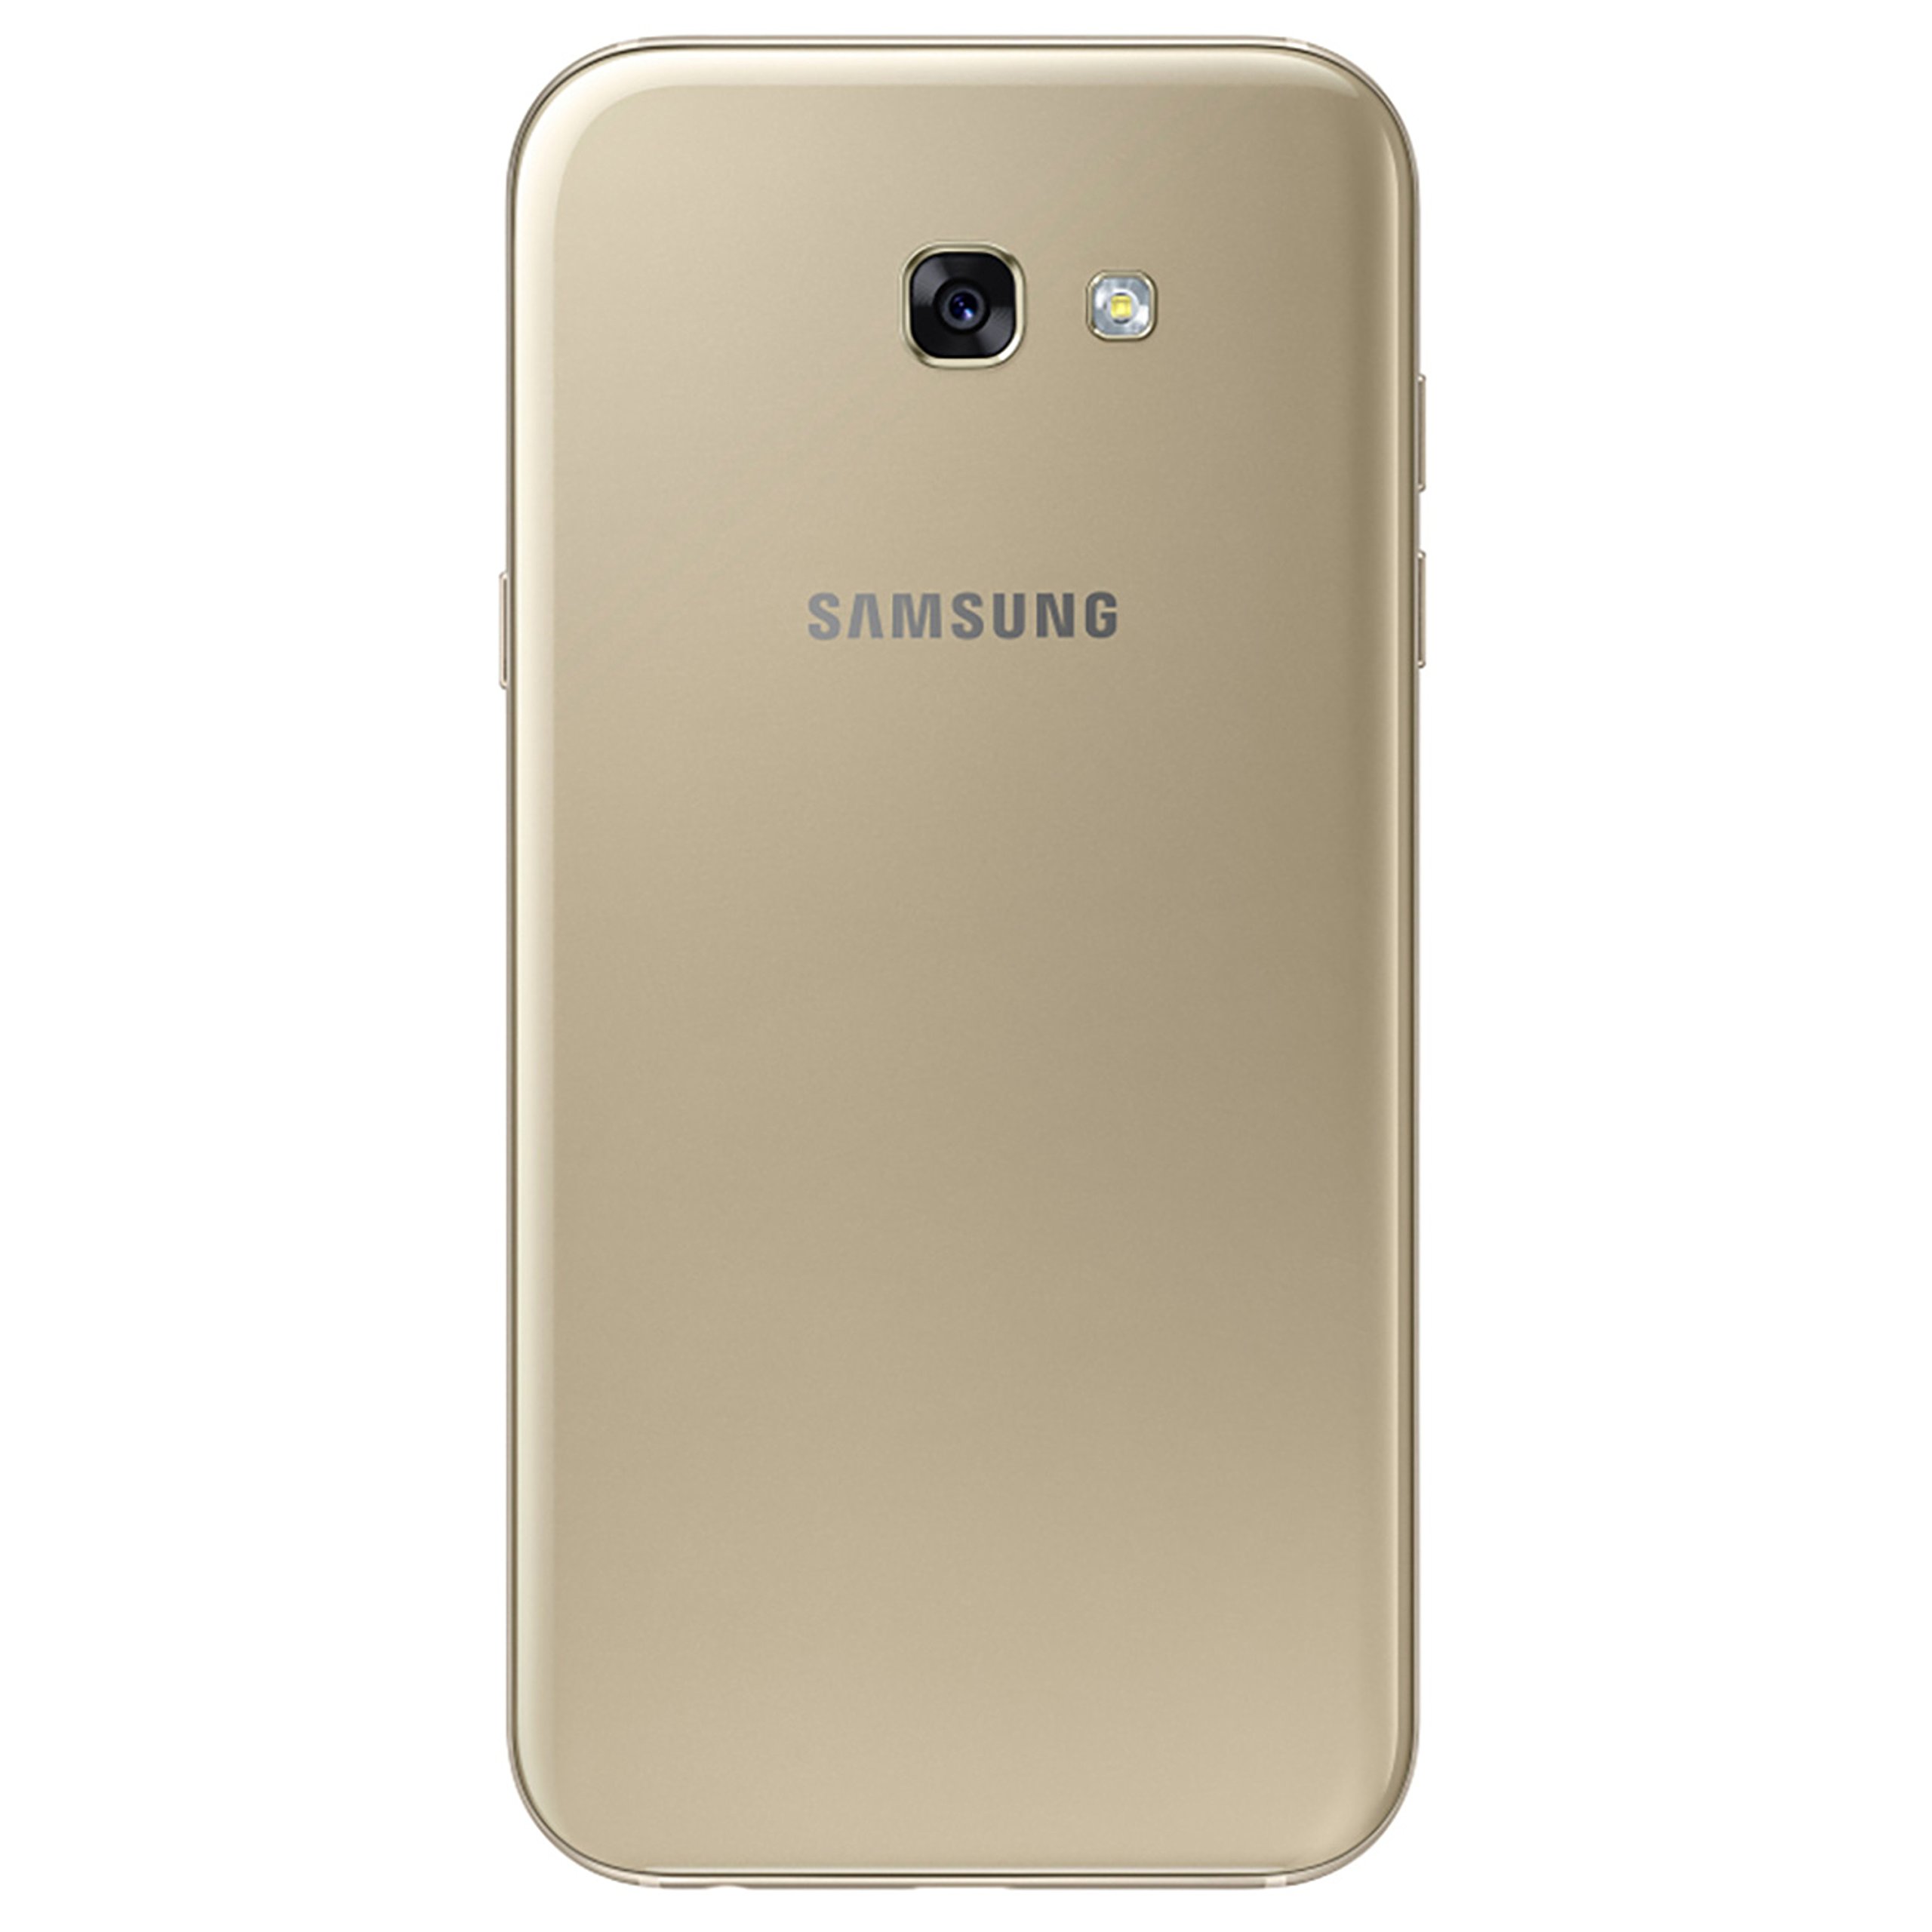 Samsung Galaxy A5 (2017) SM-A520F/DS 32GB Gold Sand, 5.2